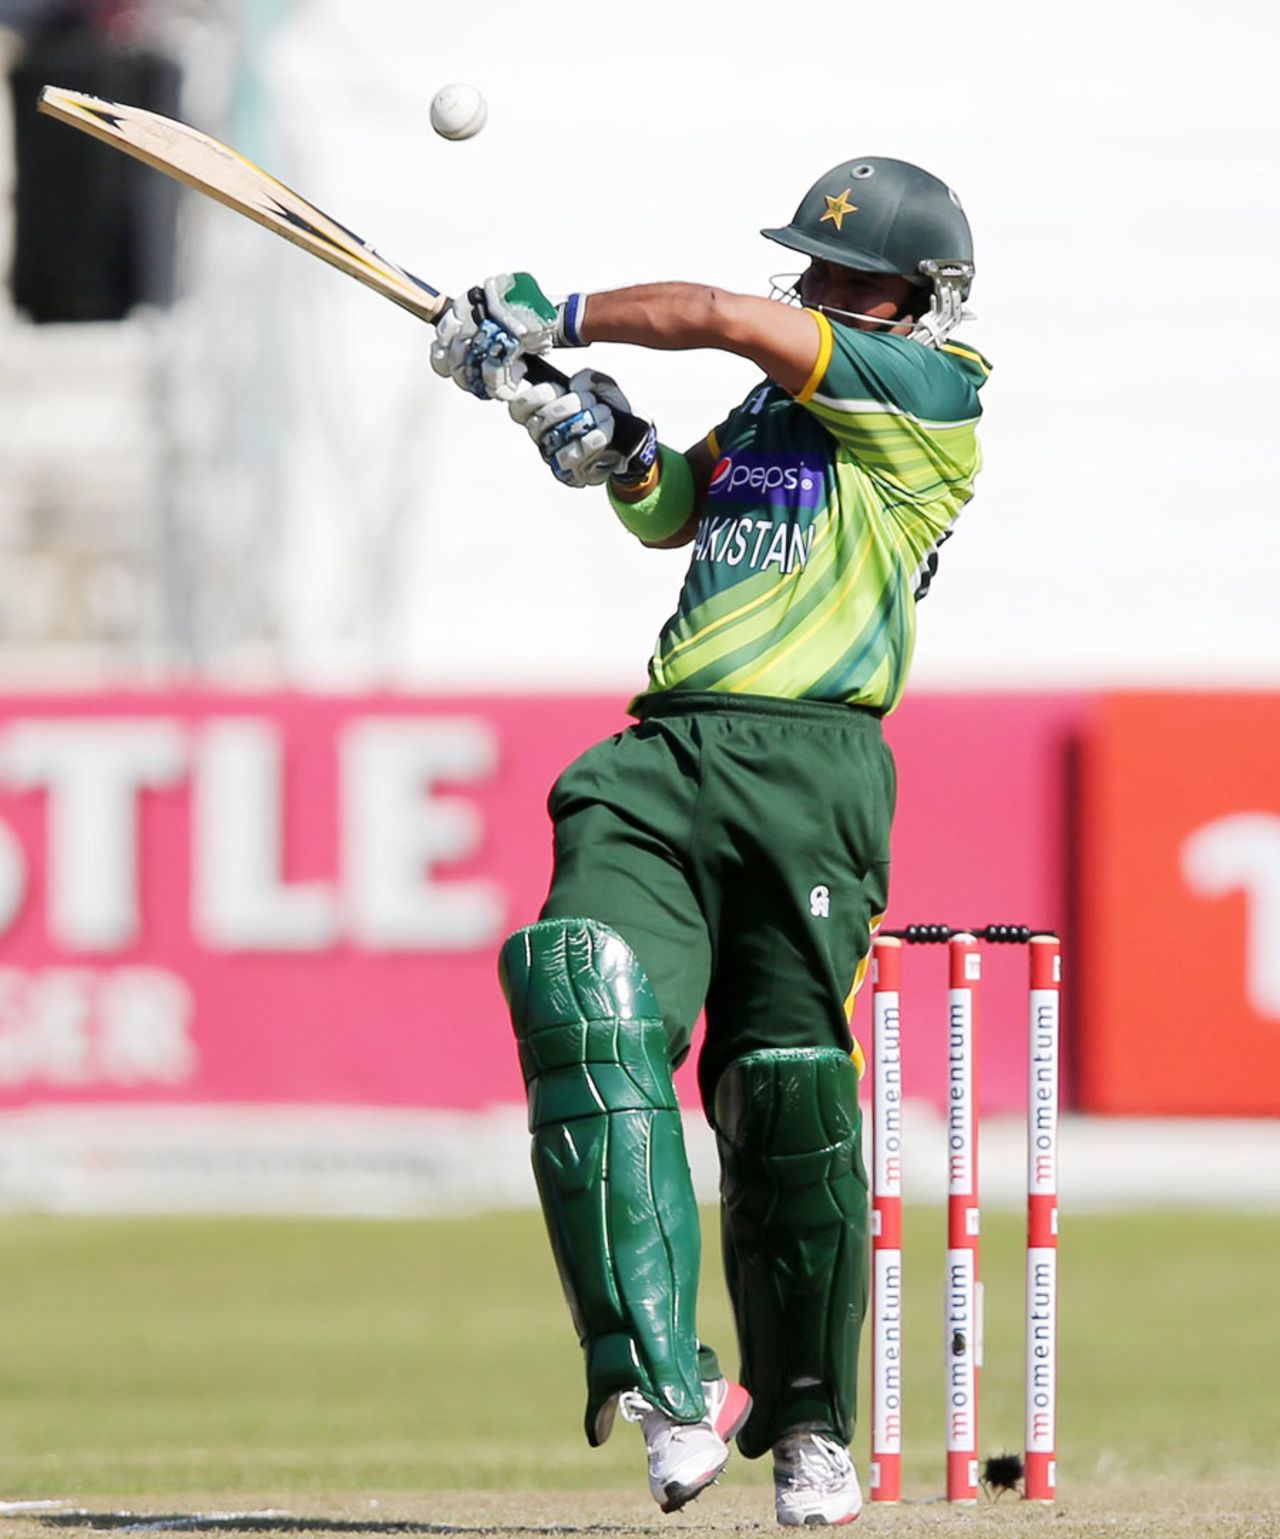 Imran Farhat pulls, South Africa v Pakistan, 4th ODI, Durban, March 21, 2013